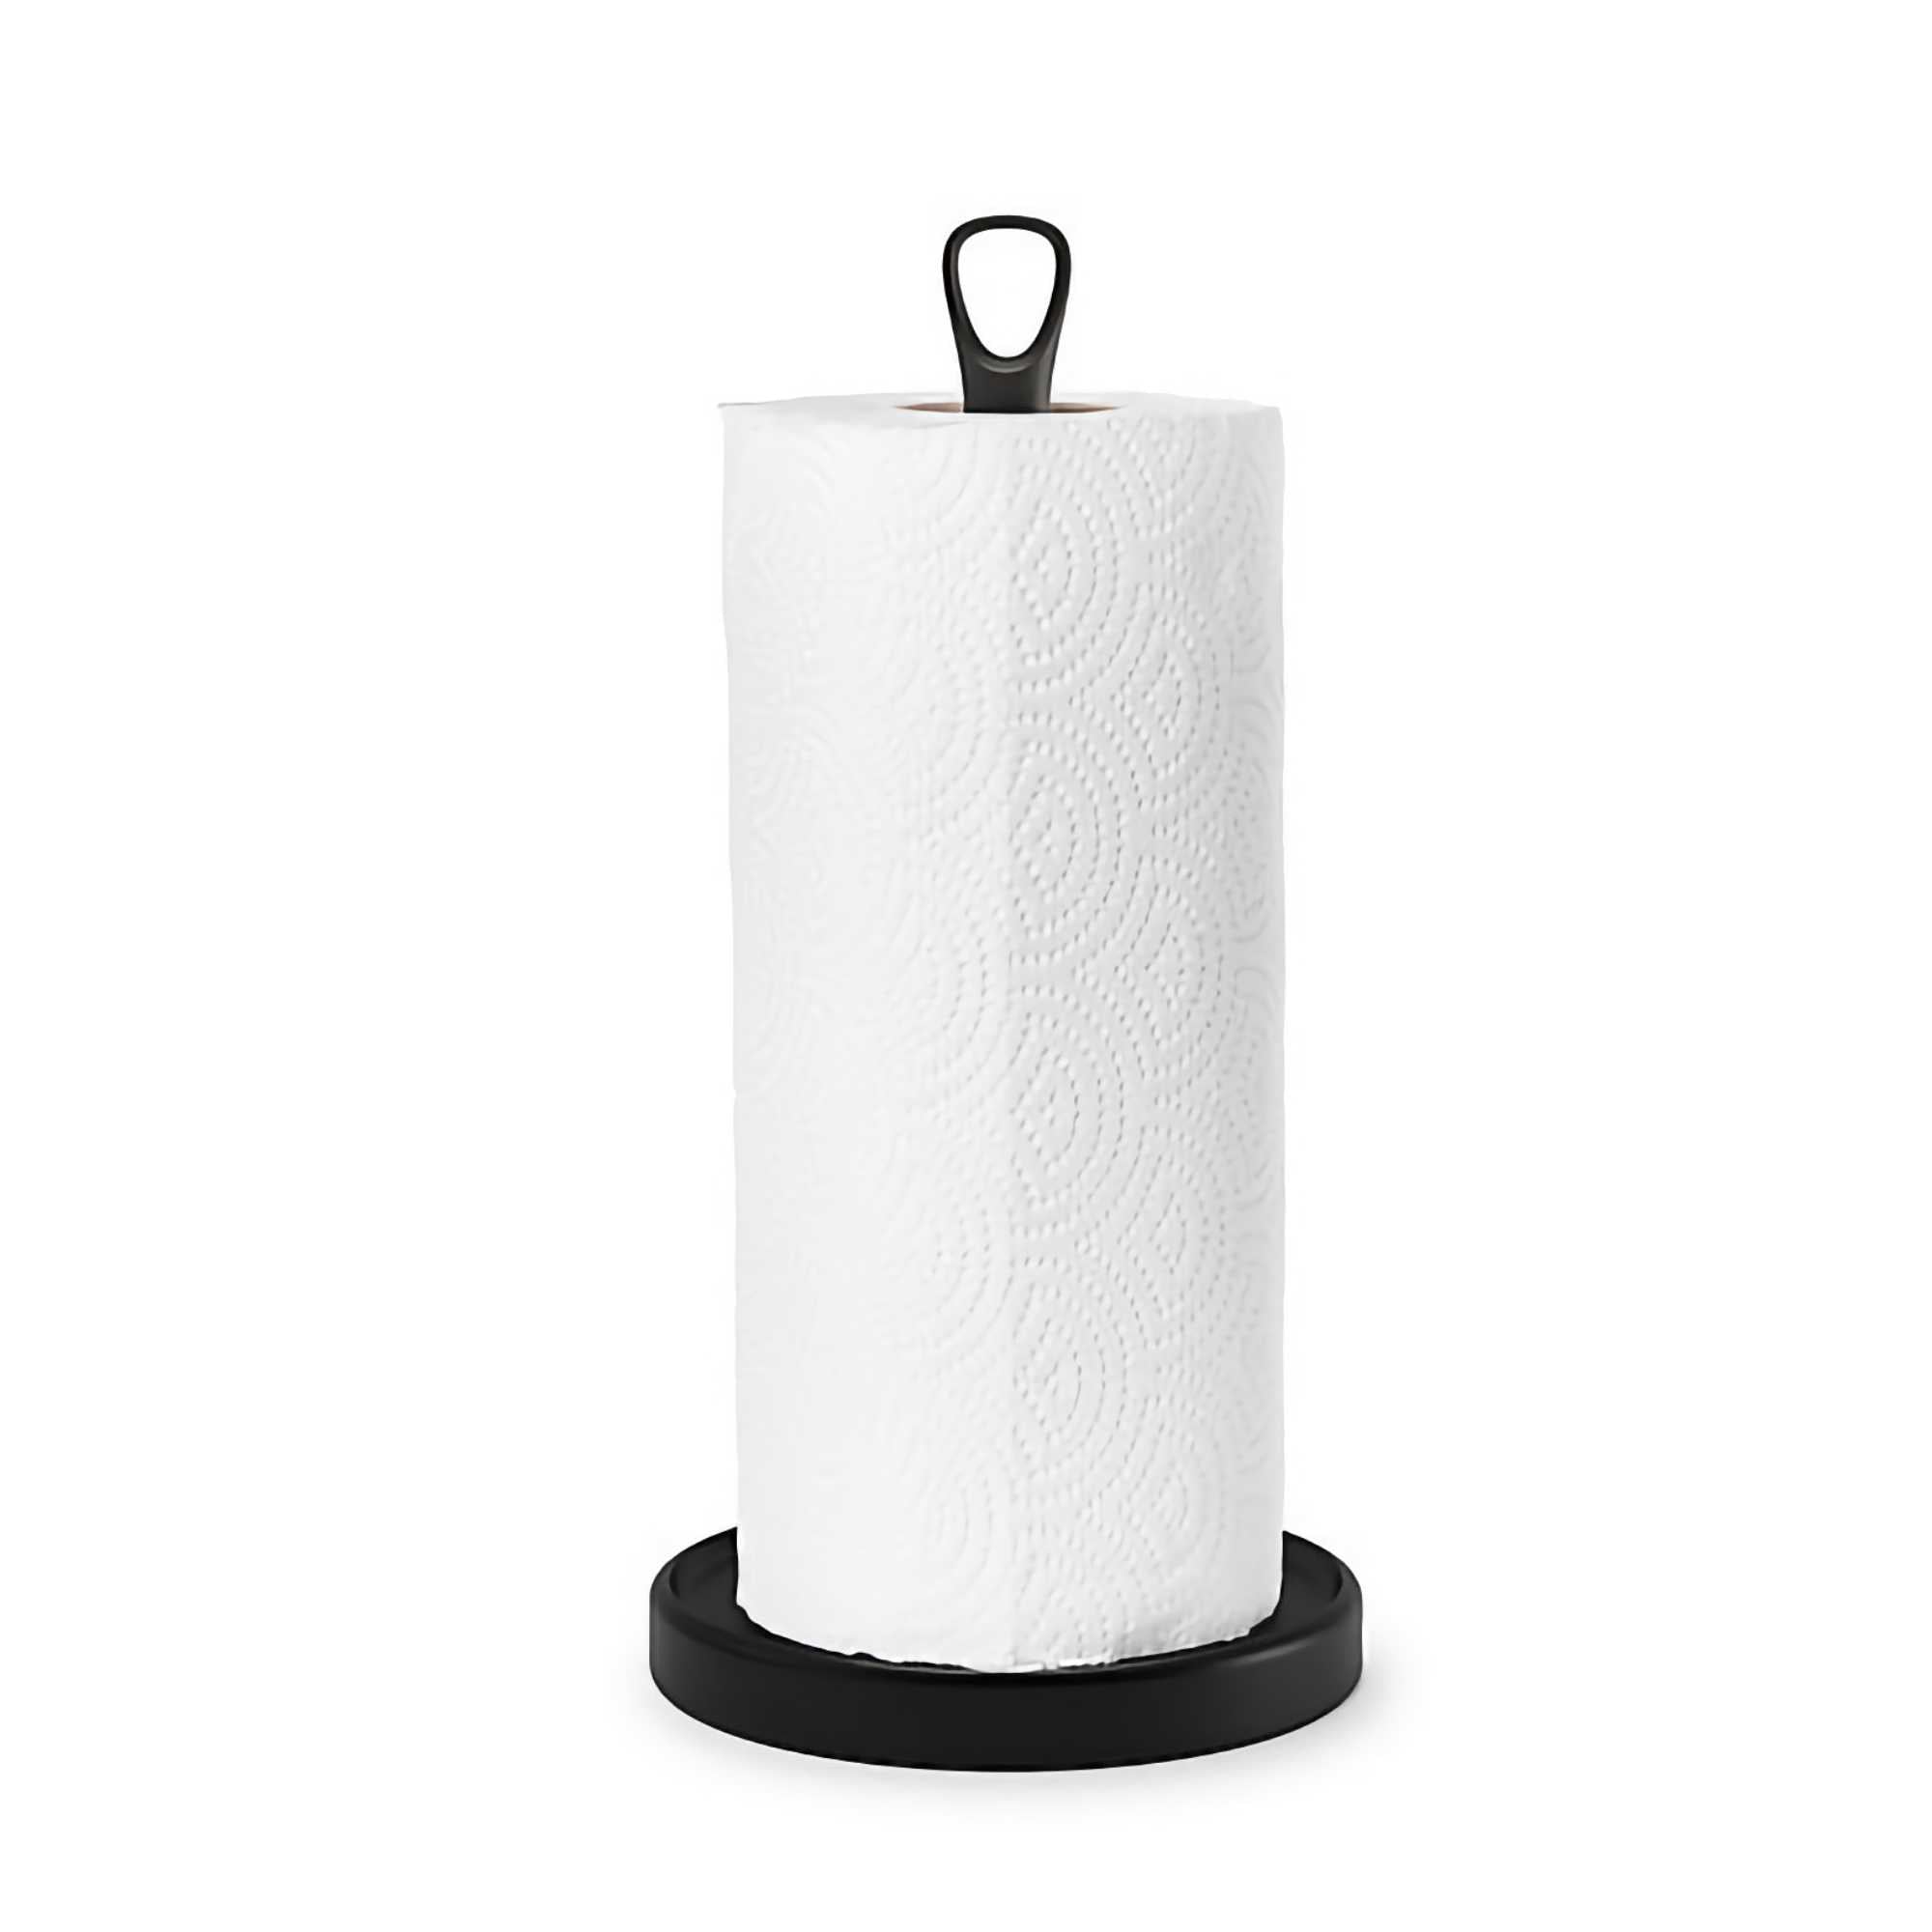 Umbra Ribbon paper towel holder, black